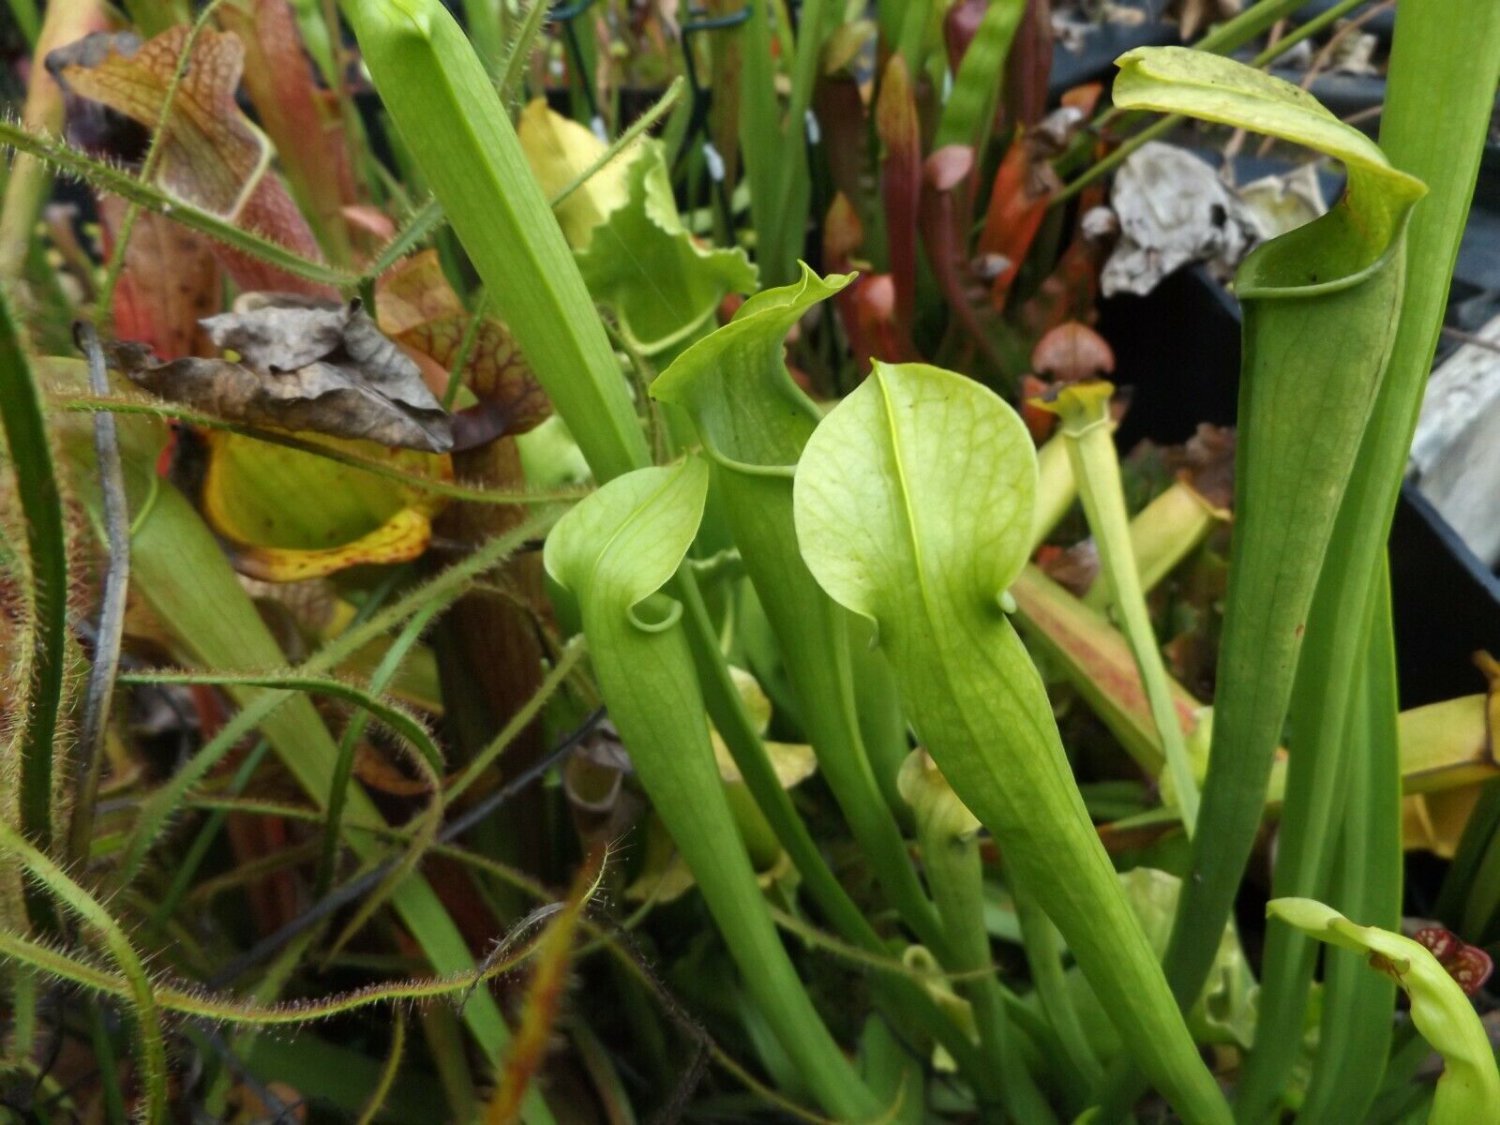 Rubra x (Oreoph. x Purp. Burkeii) carnivorous sarracenia plant